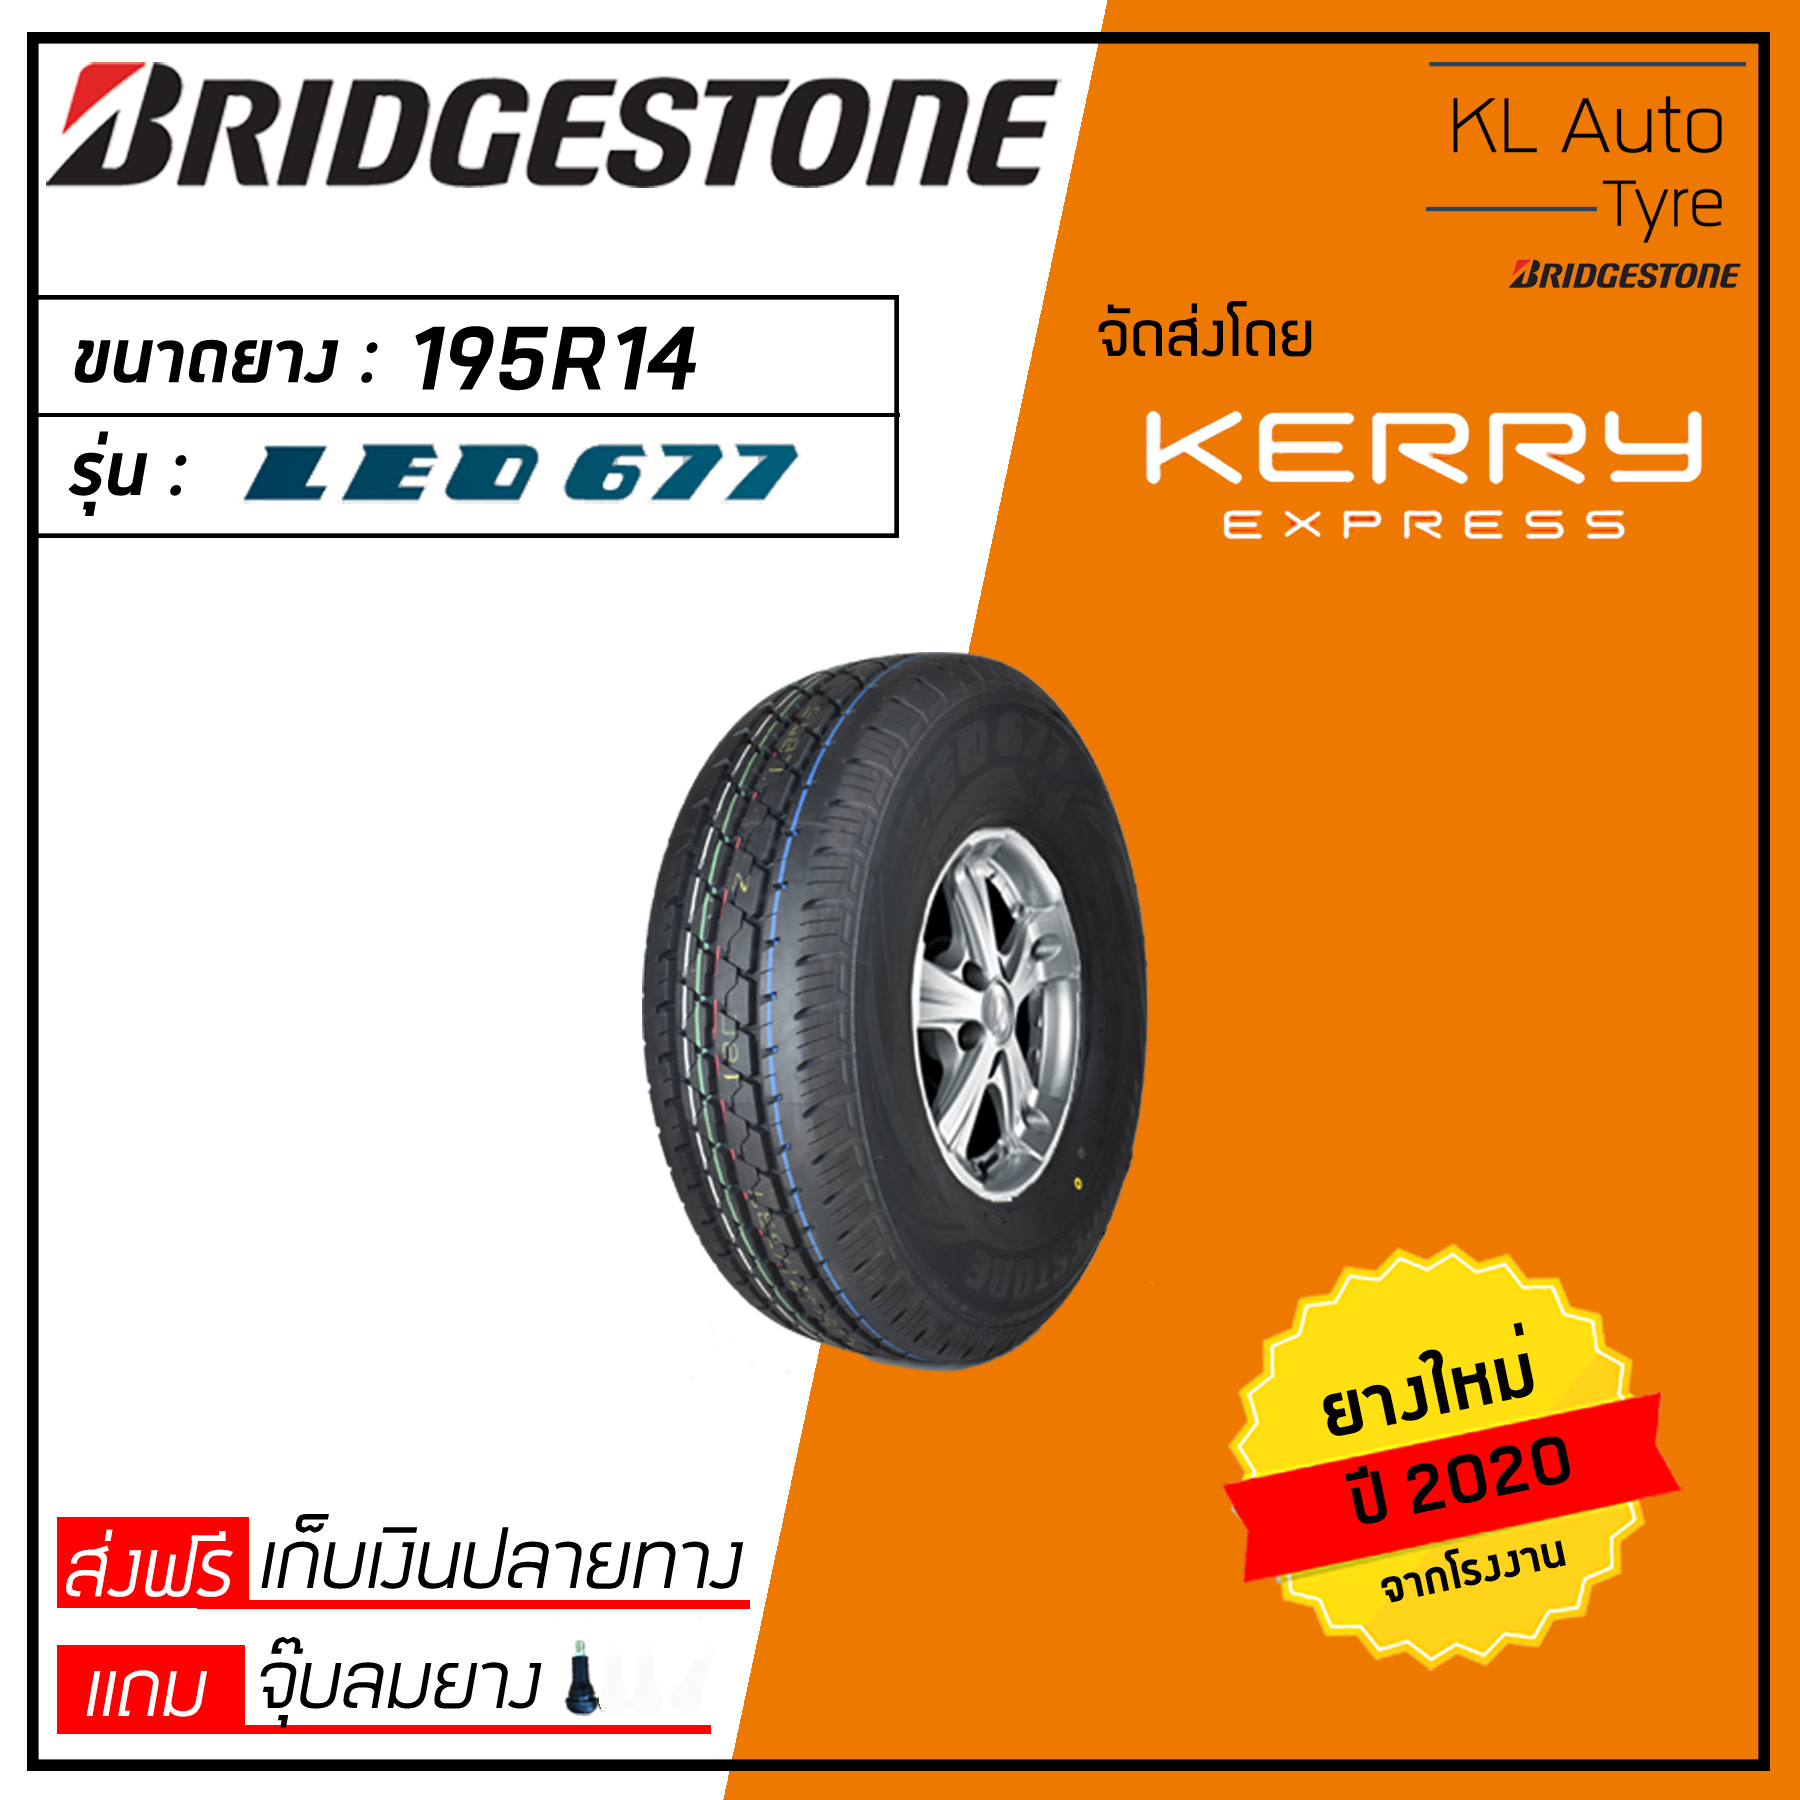 Bridgestone 195-14 LEO677 1 เส้น ปี 20 (ฟรี จุ๊บยาง 1 ตัว มูลค่า 50 บาท)